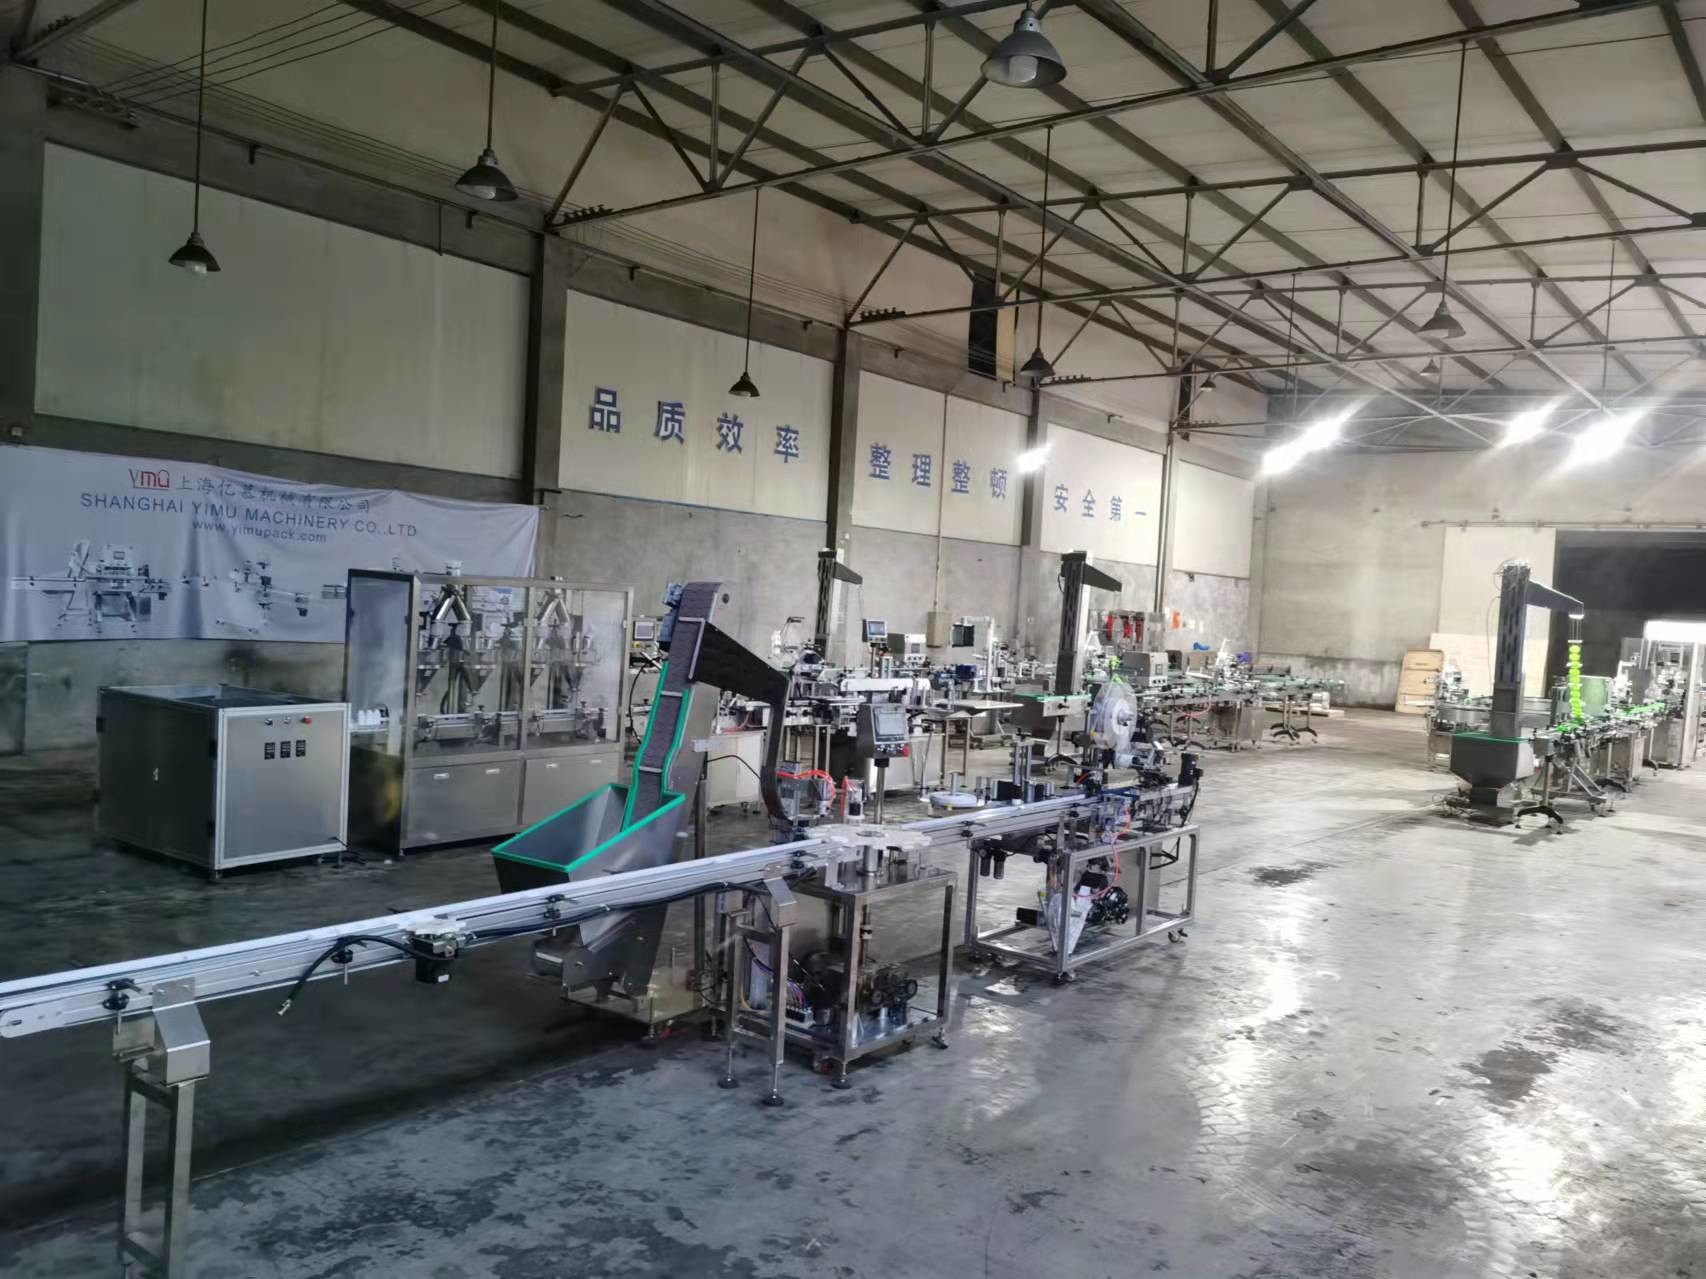 Shanghai Yimu Machinery Co., Ltd.